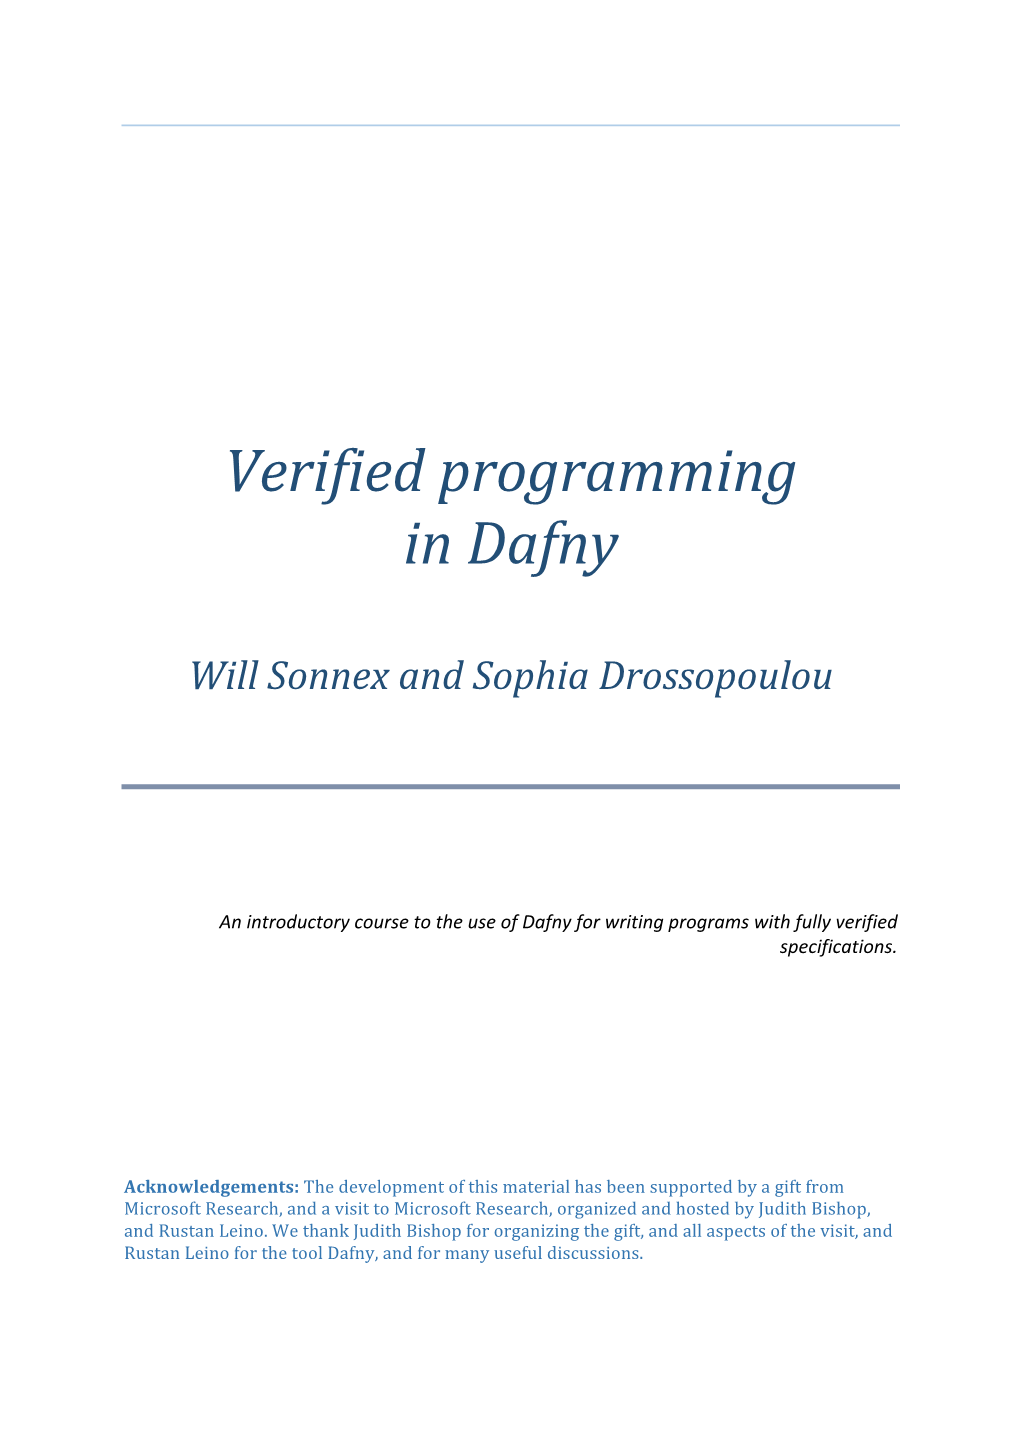 Verified Programming in Dafny